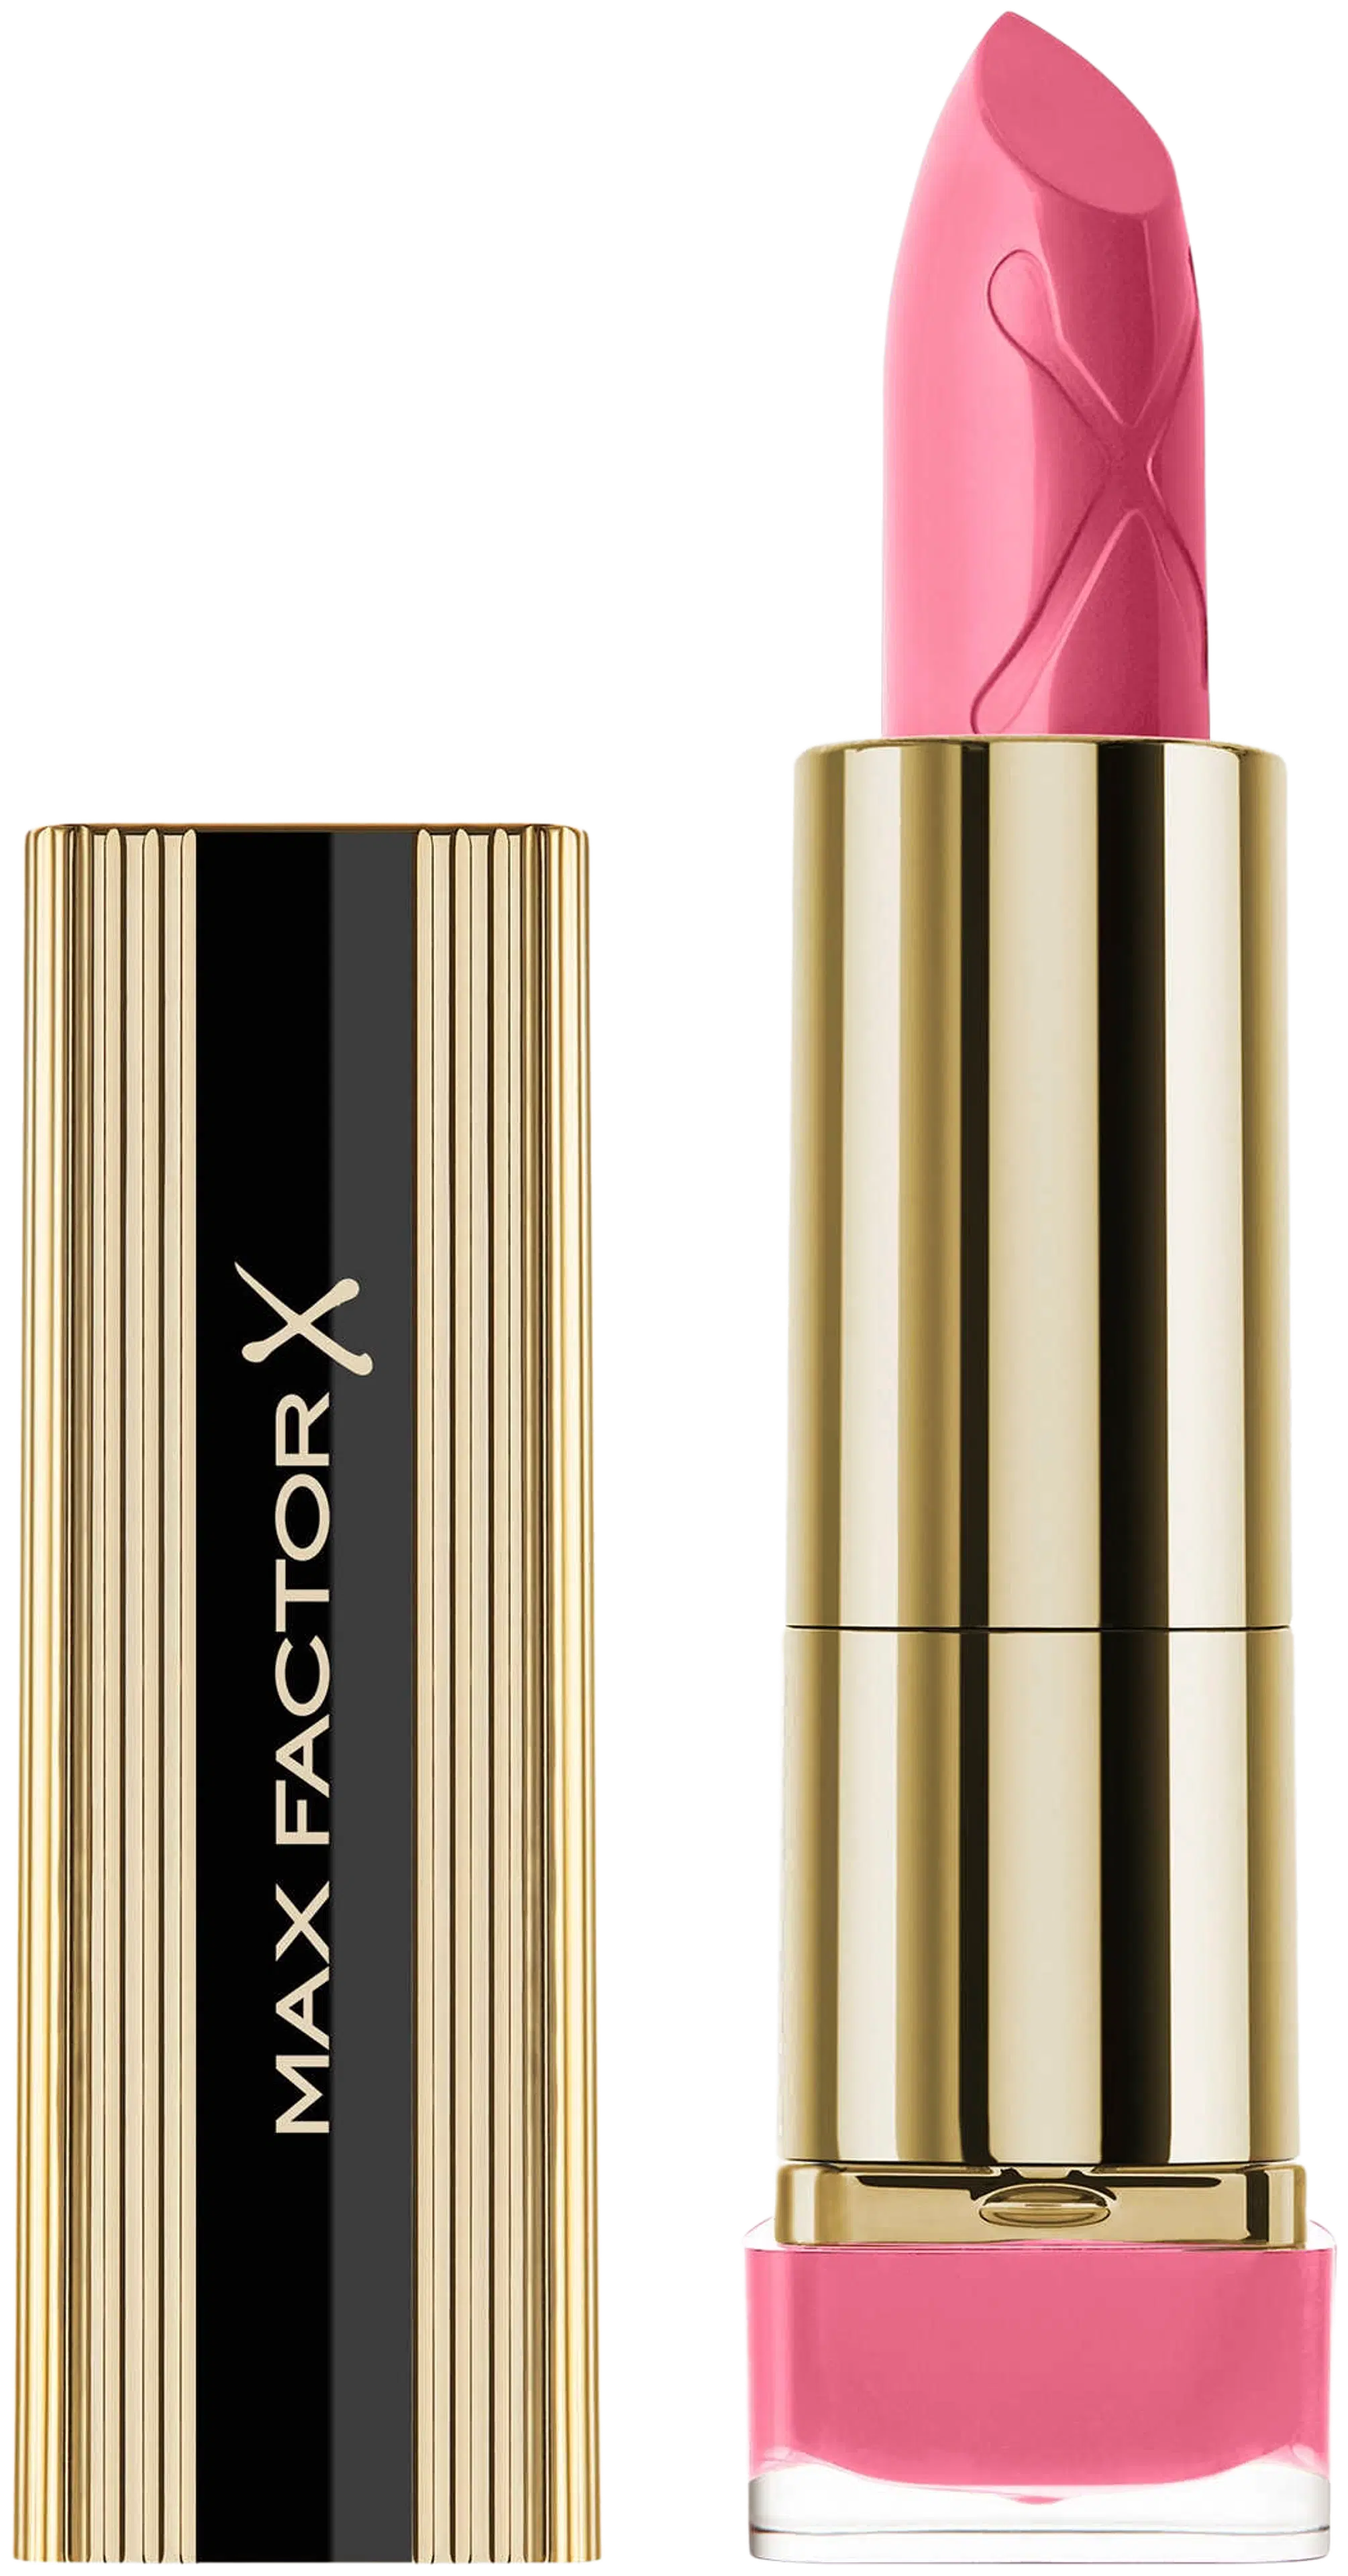 Max Factor Colour Elixir huulipuna 4 g, 090 English Rose